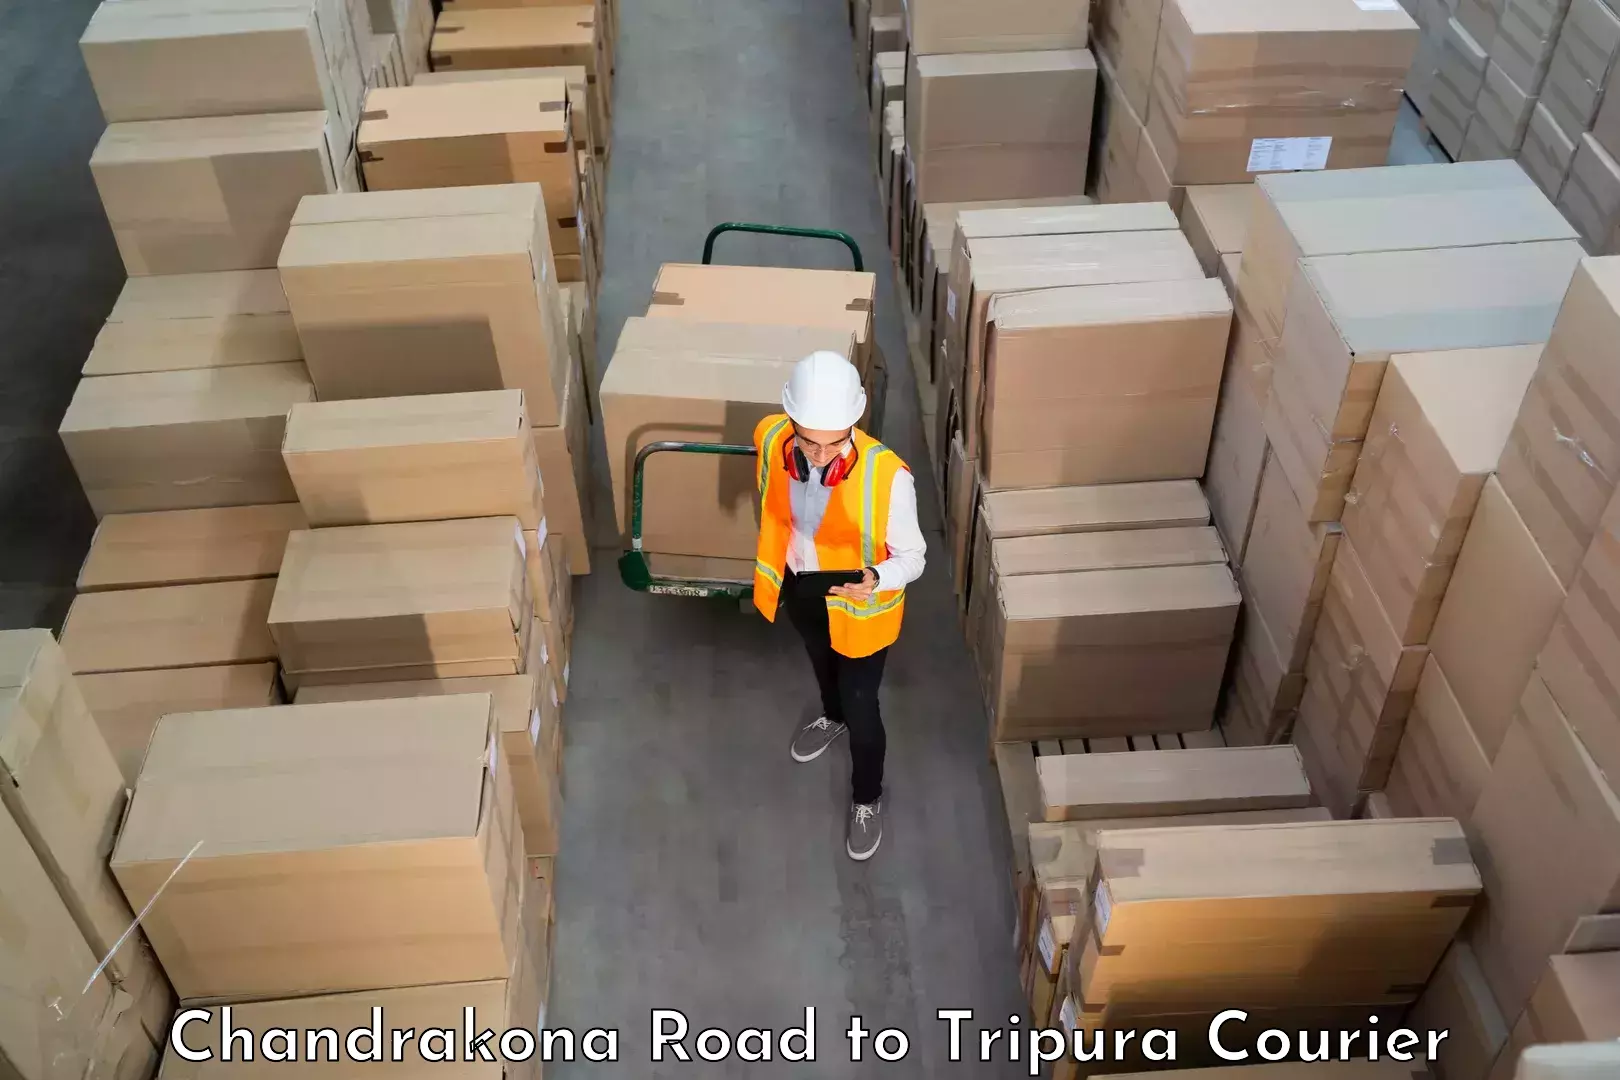 Furniture moving assistance Chandrakona Road to Tripura